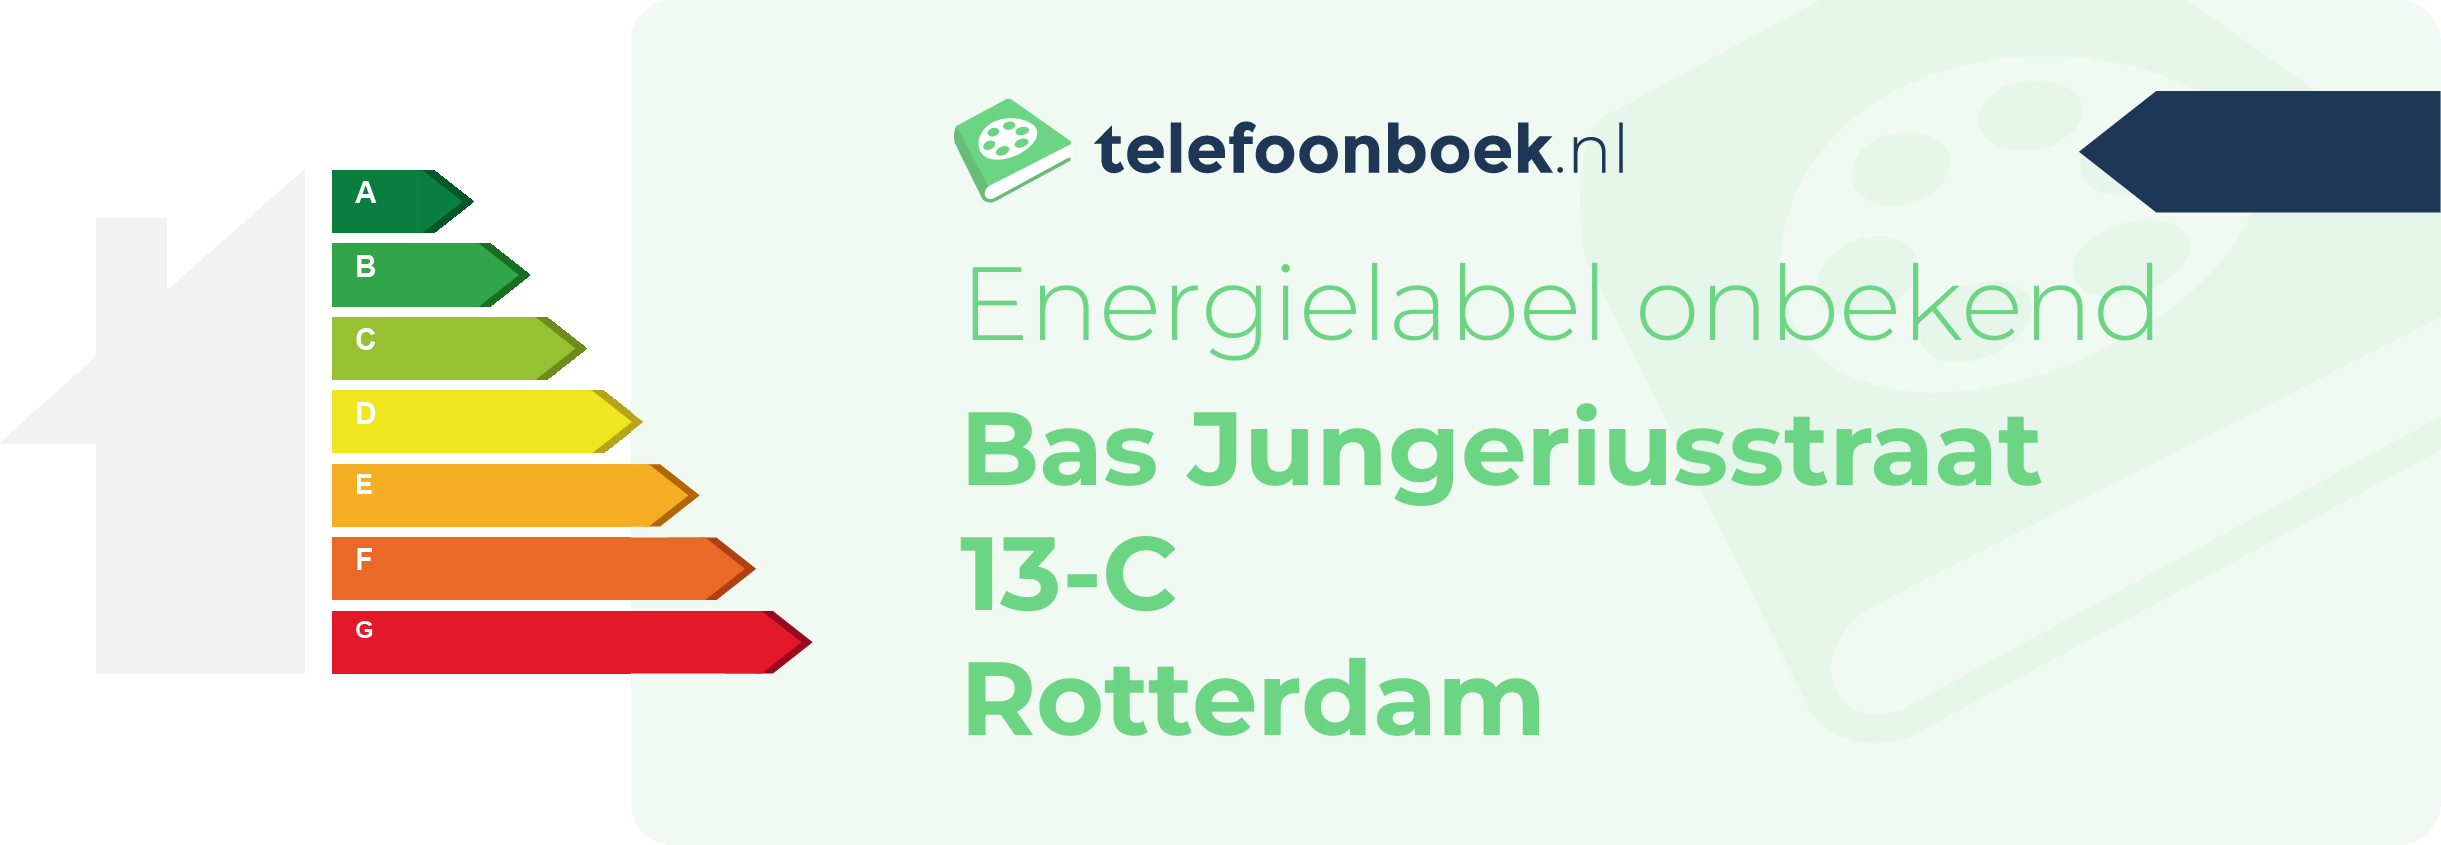 Energielabel Bas Jungeriusstraat 13-C Rotterdam